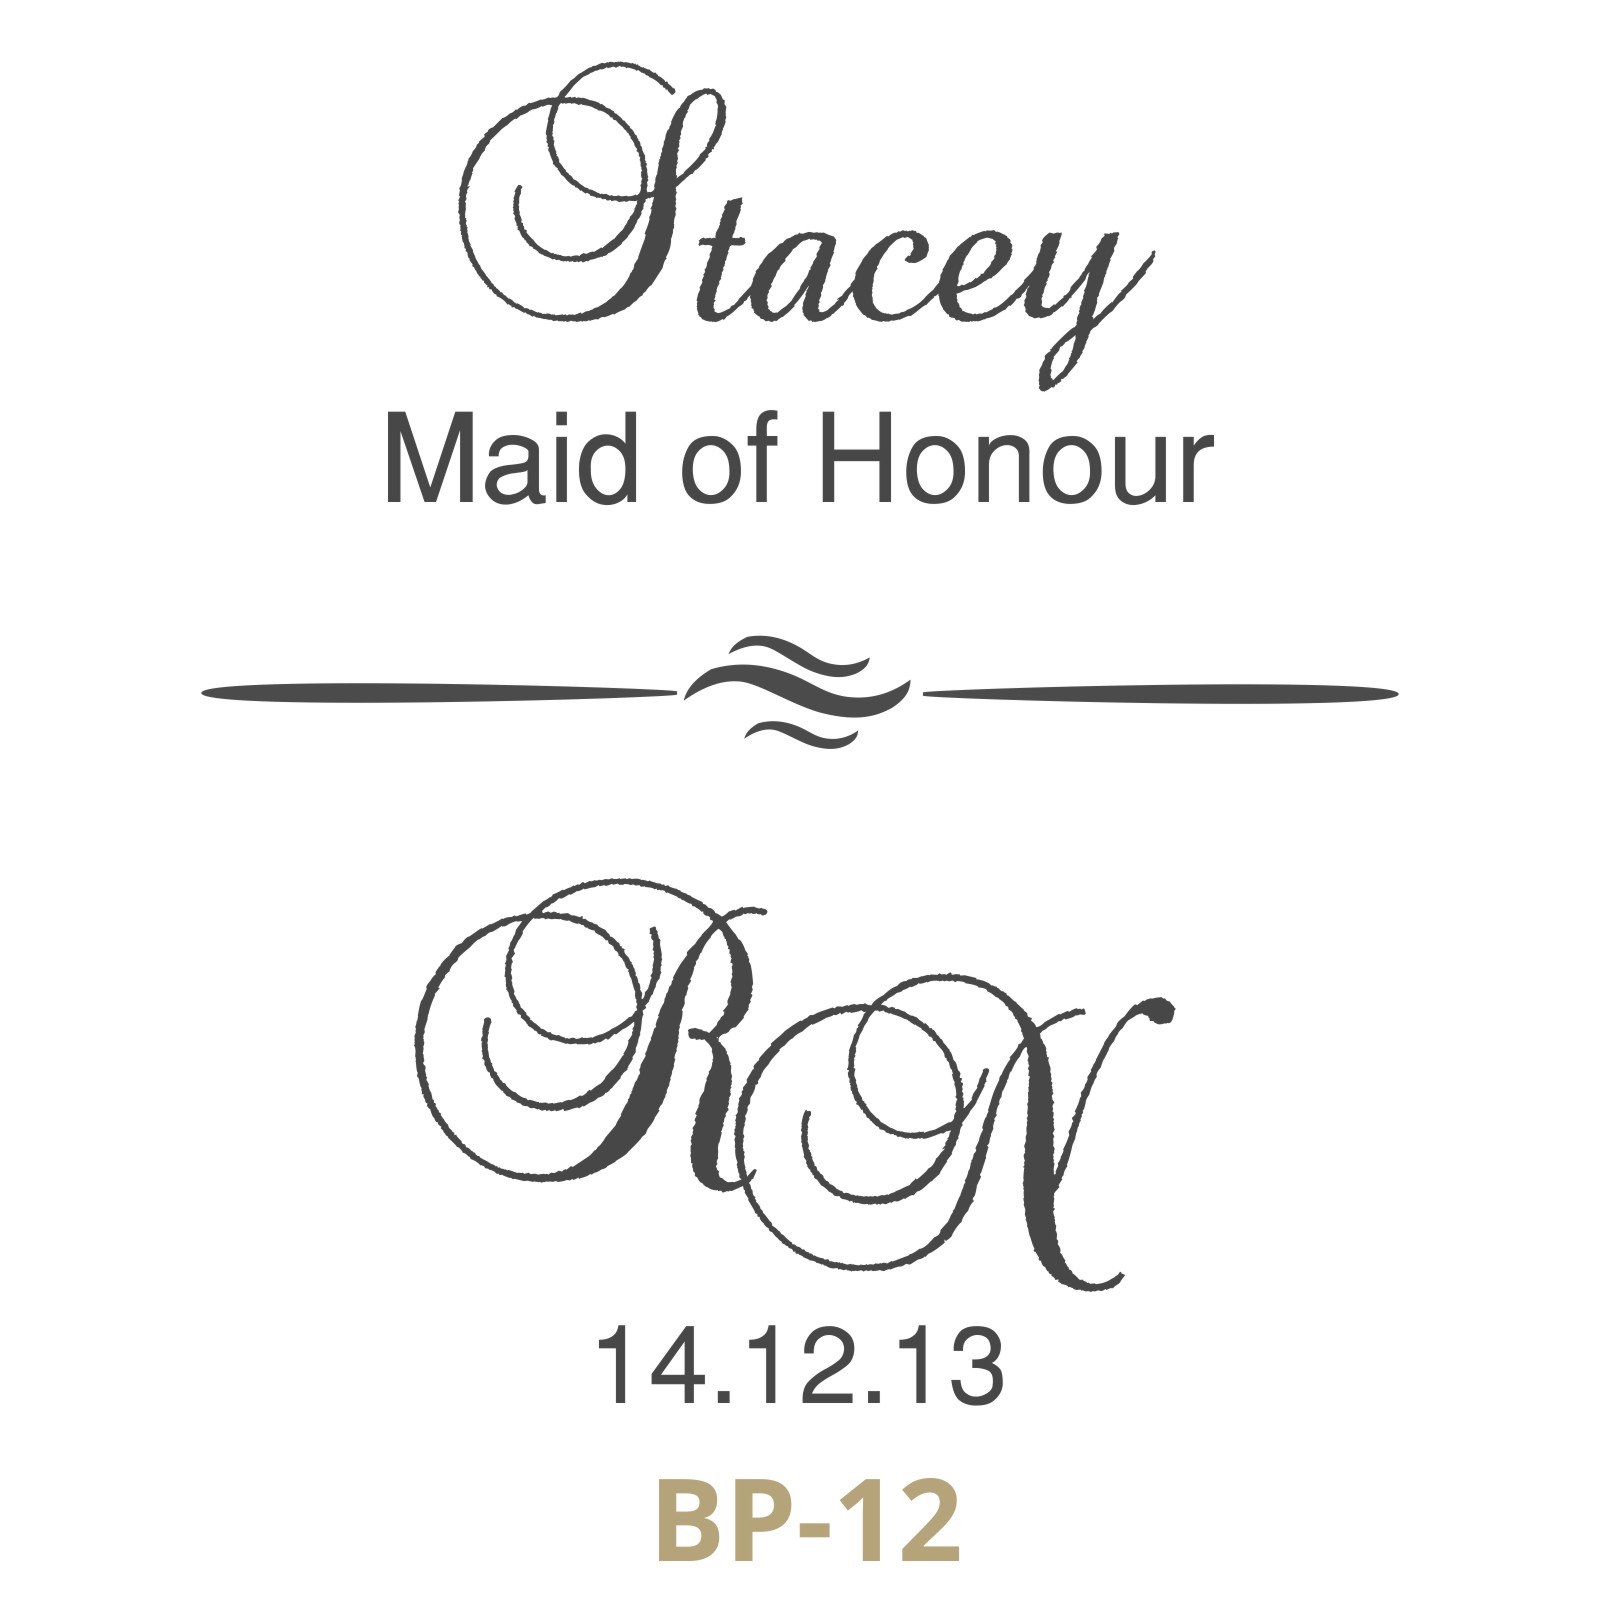 engraved quartet scotch glass for groomsman gift